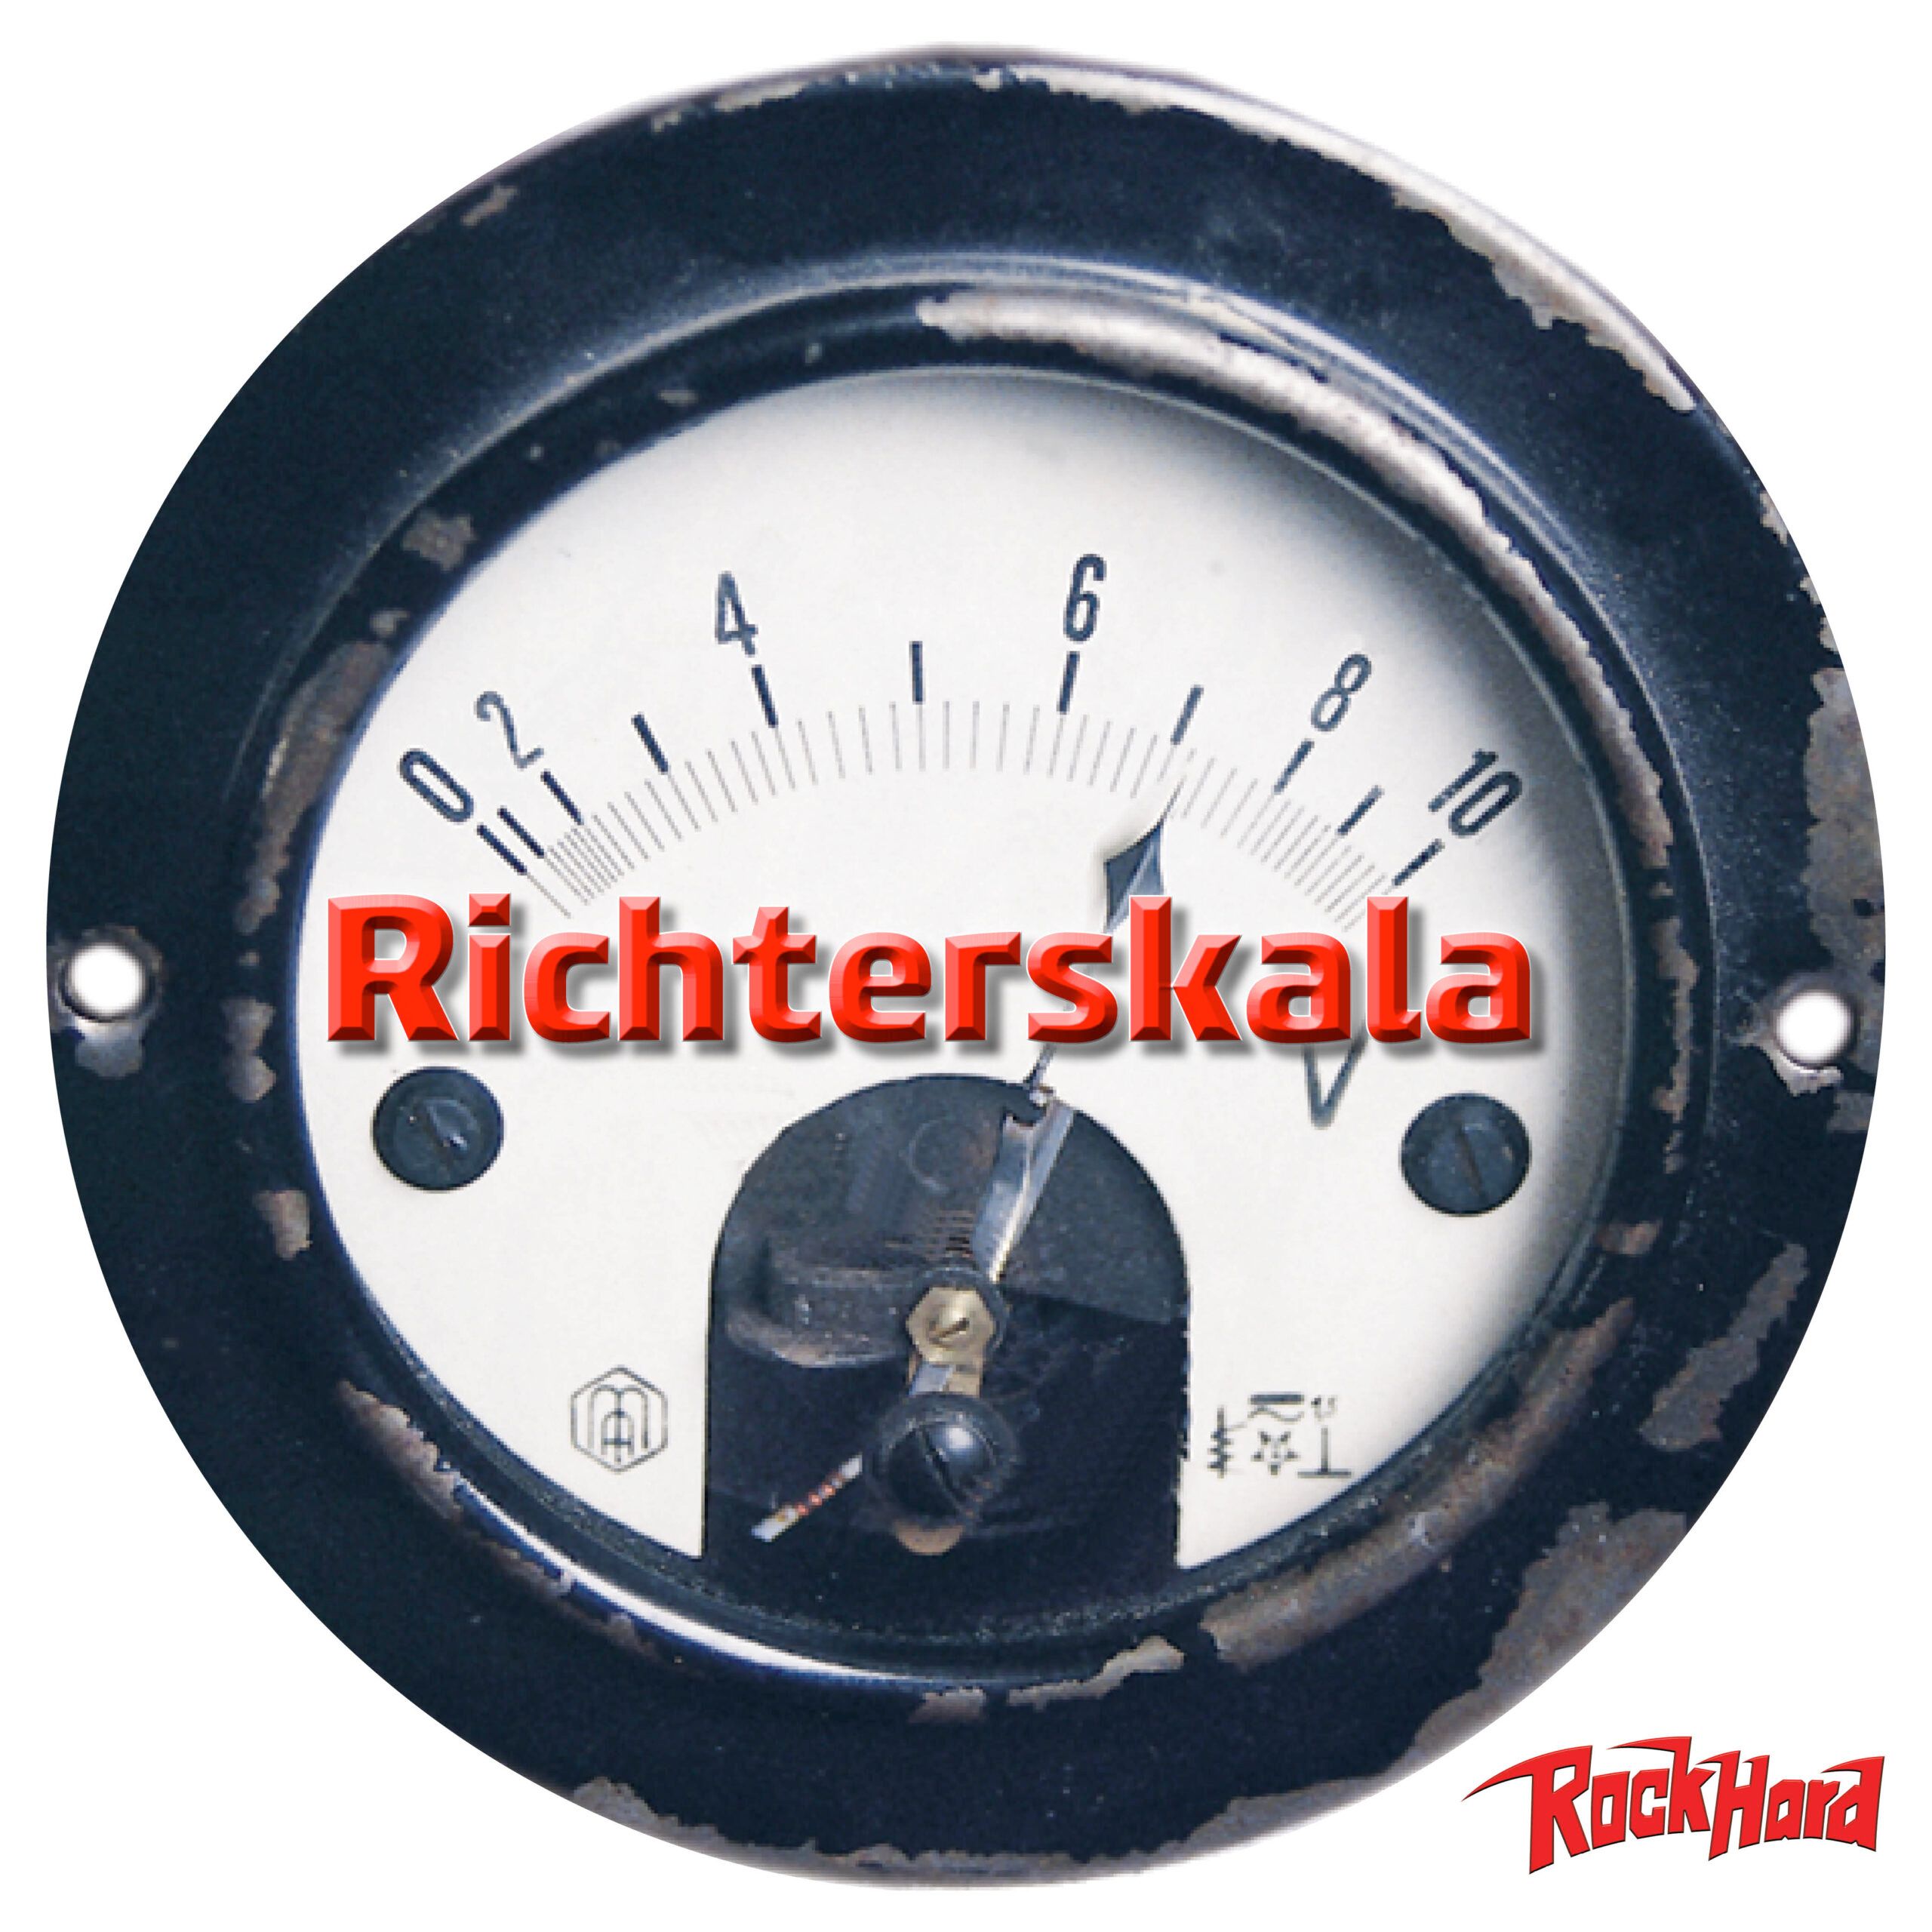 Rock Hard Richterskala November 2020: Die Spotify-Playlist ist online